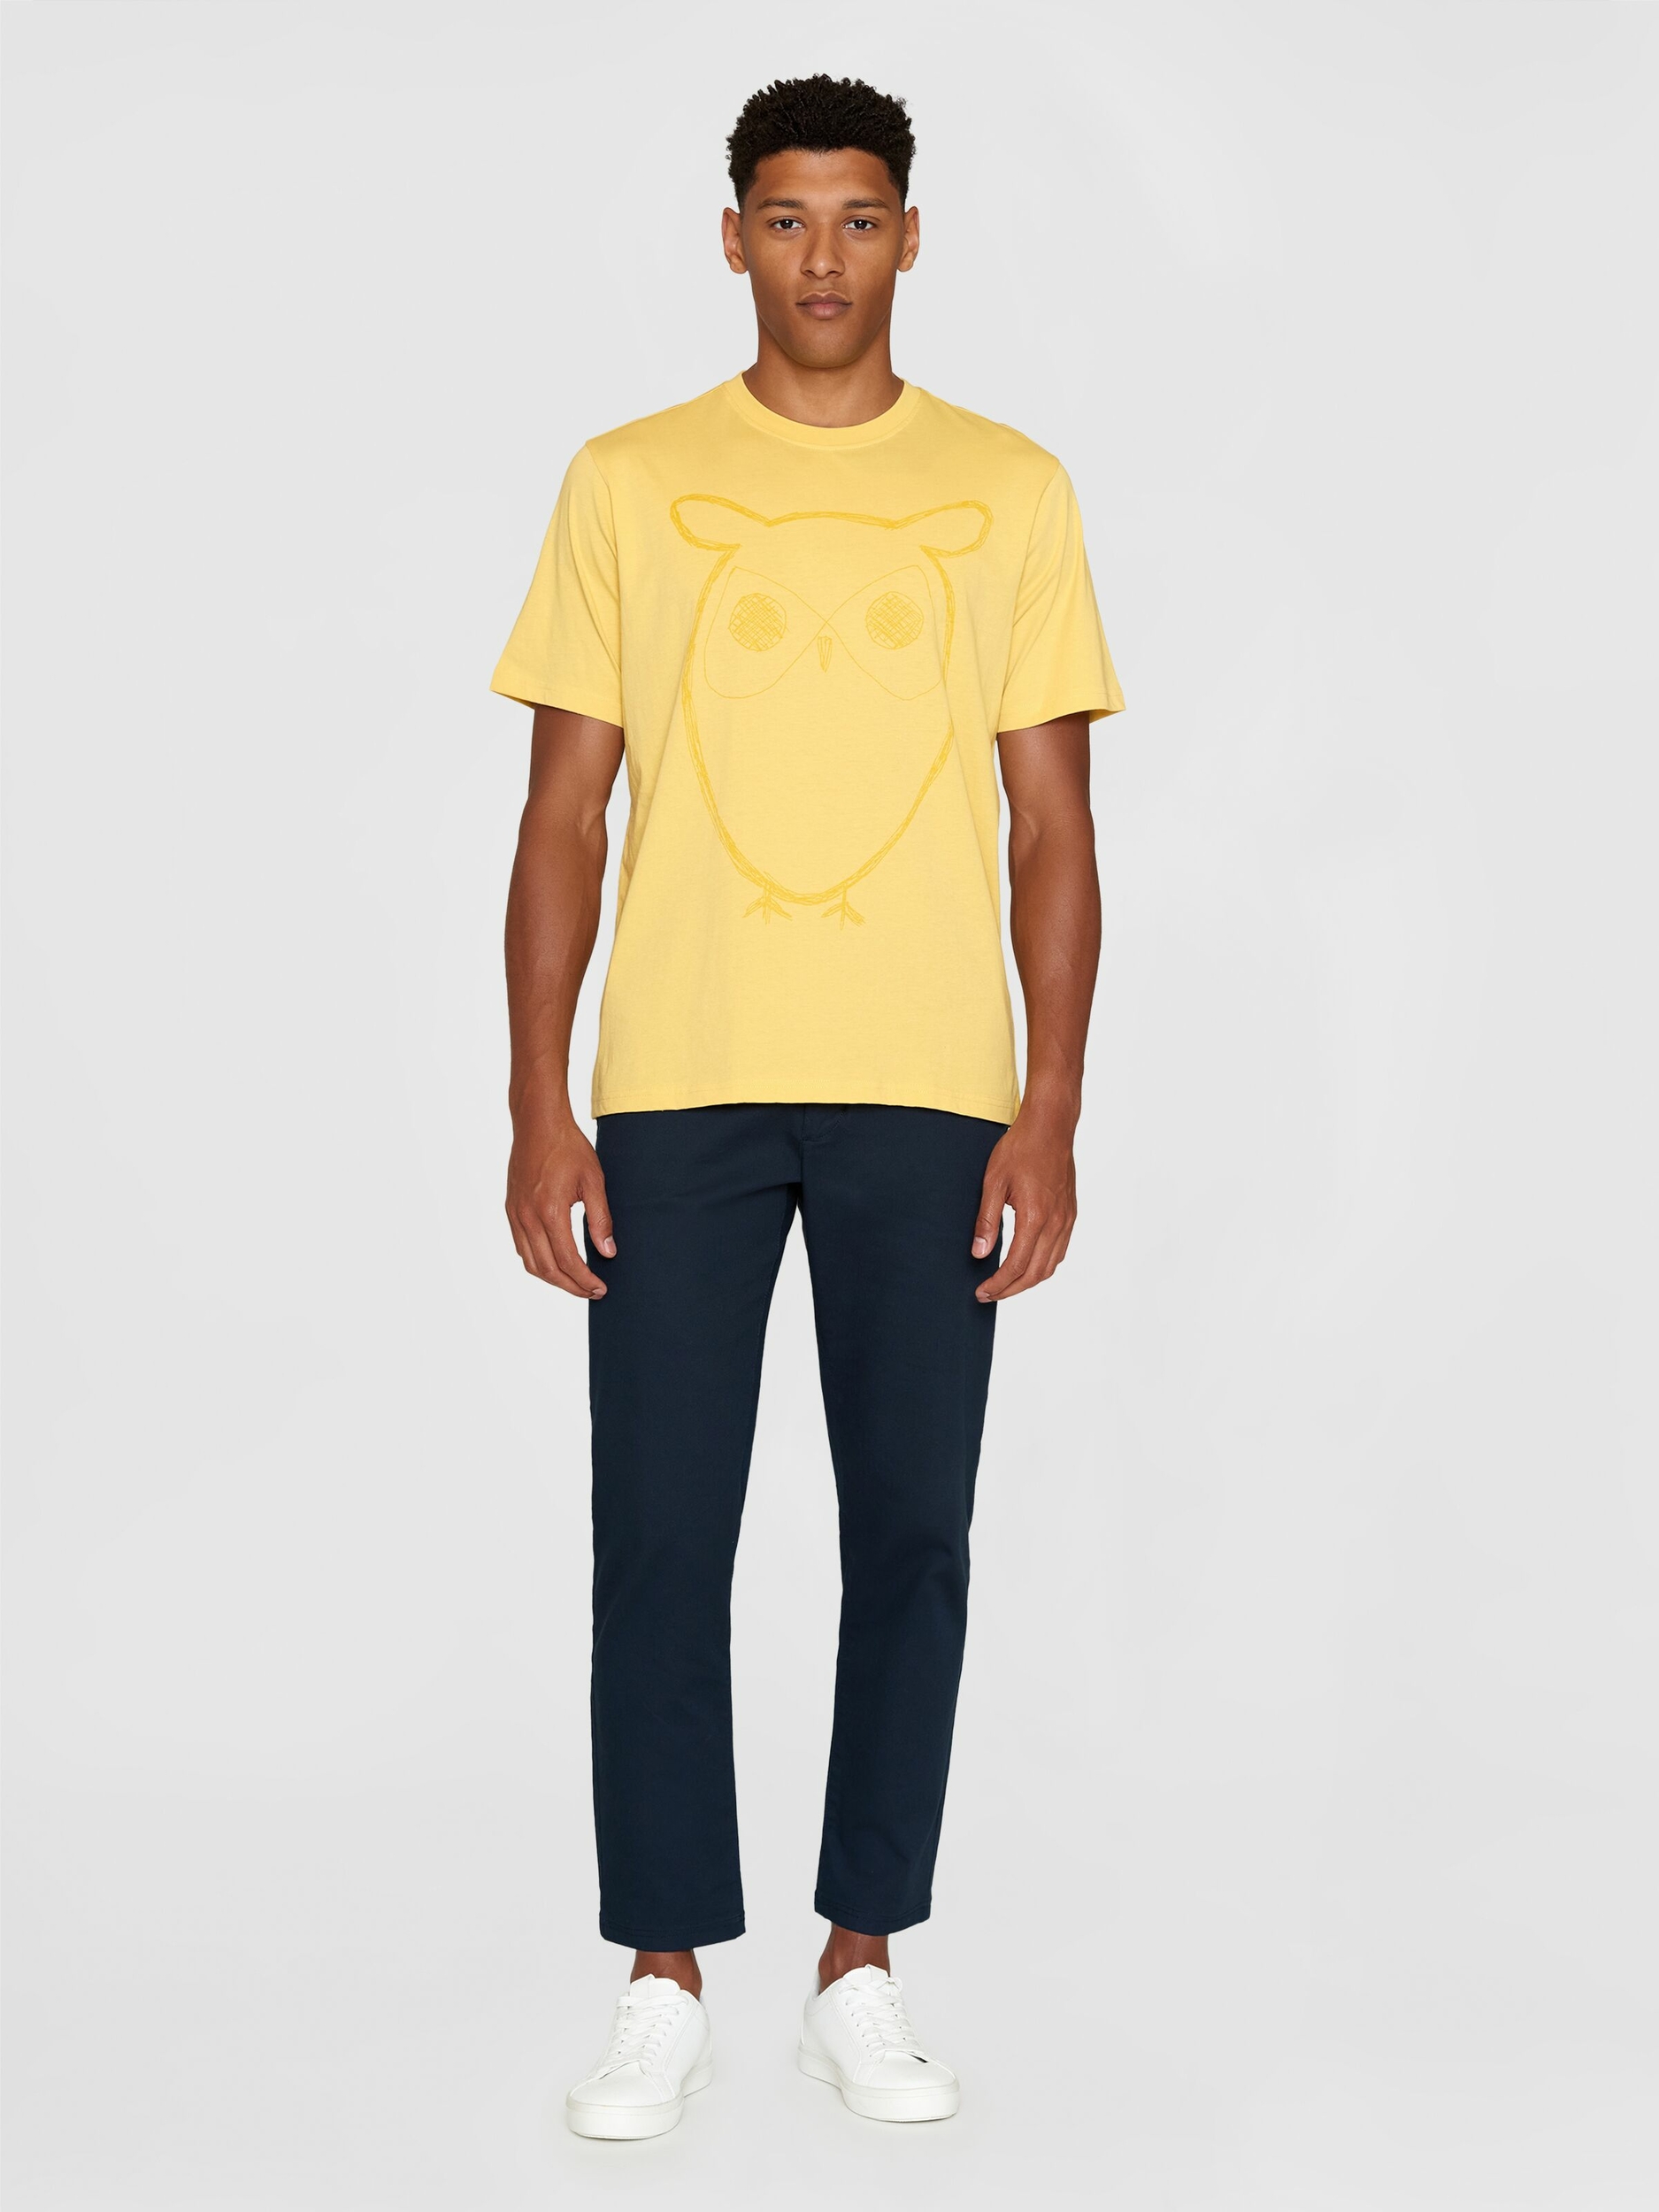 T-shirt Grand Hibou - misted yellow - coton biologique - Knowledge Cotton Apparel 04